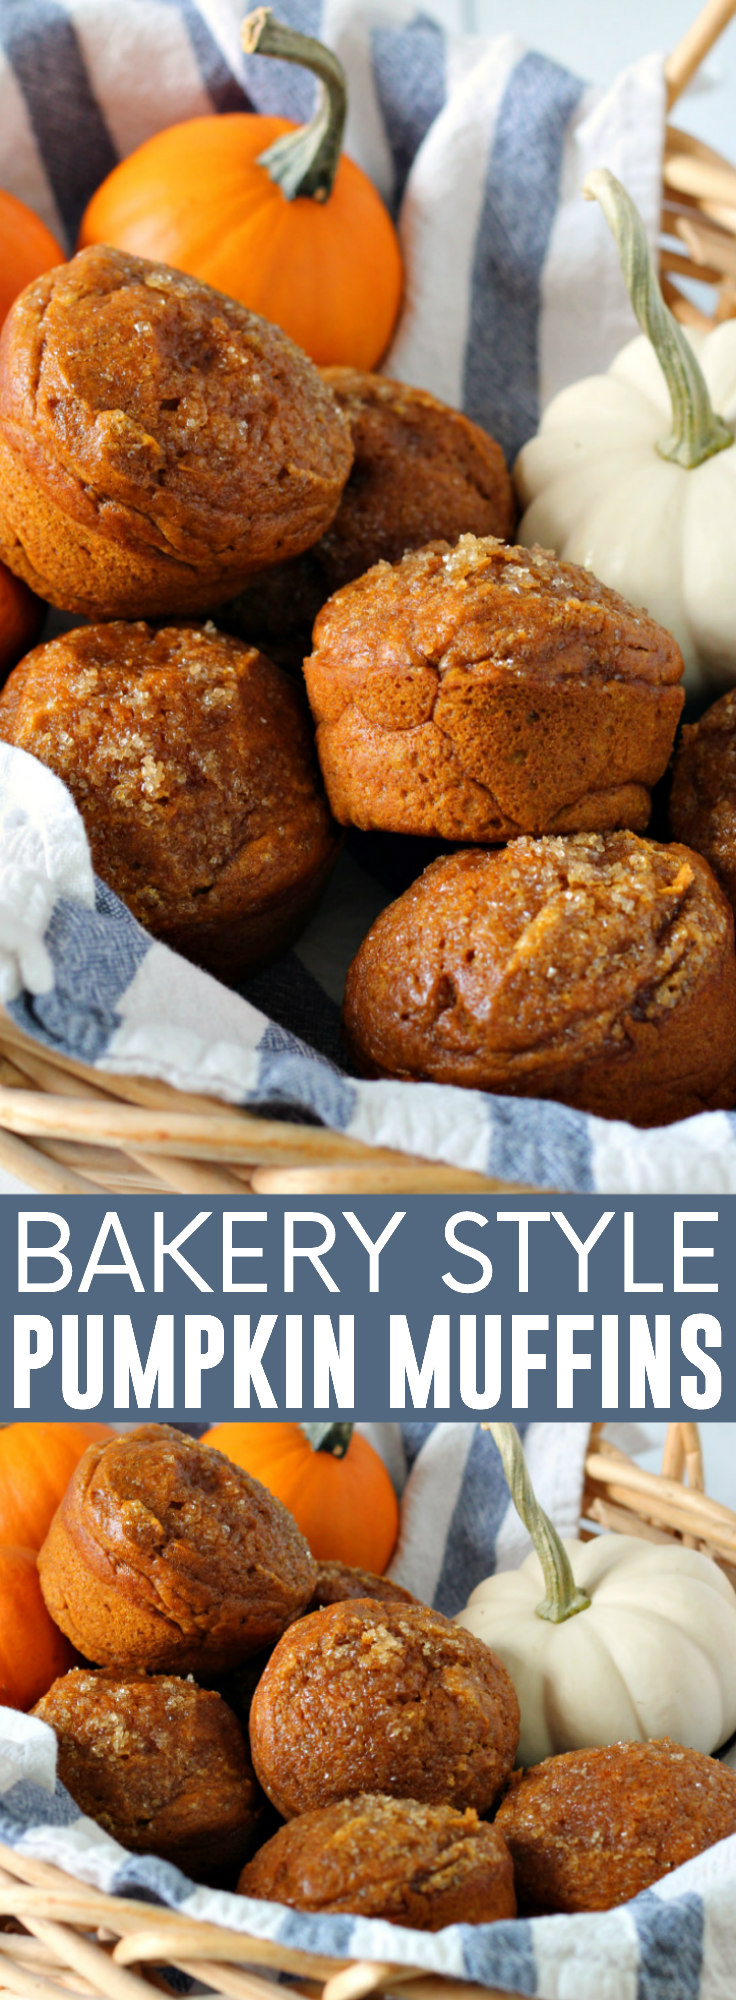 Bakery Style Pumpkin Muffins pinnable image.